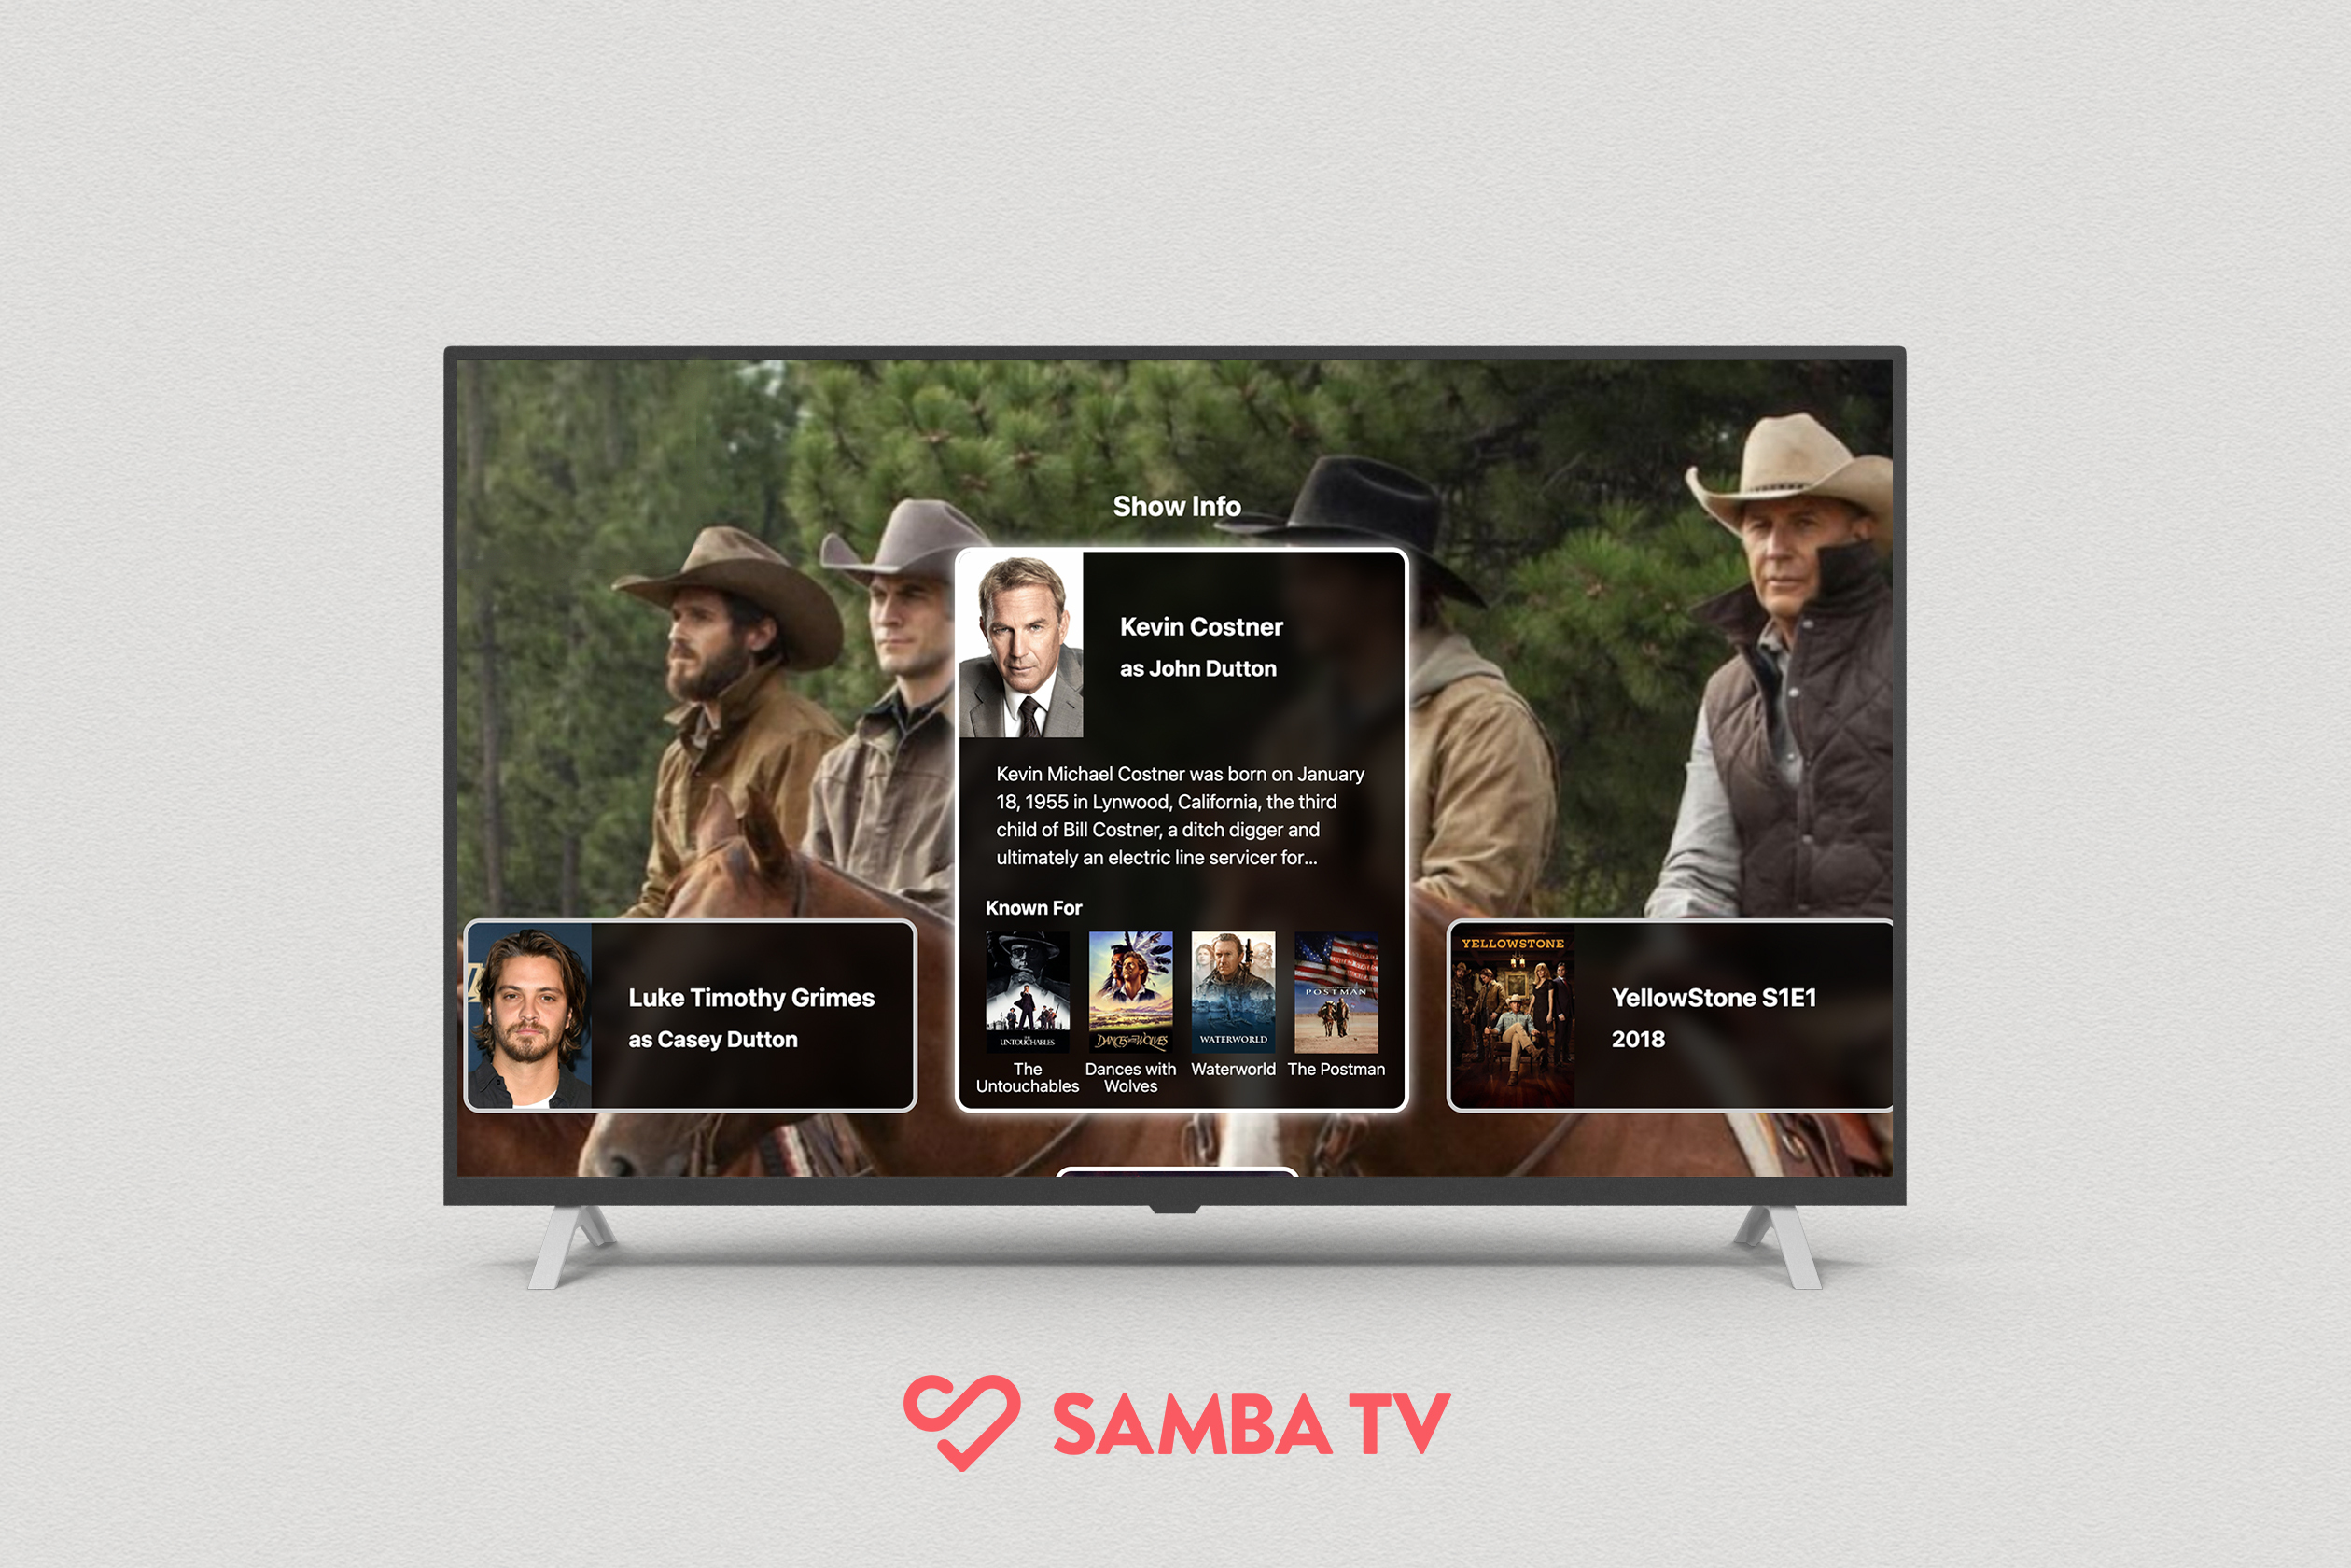 TCL-Samba TV screen image